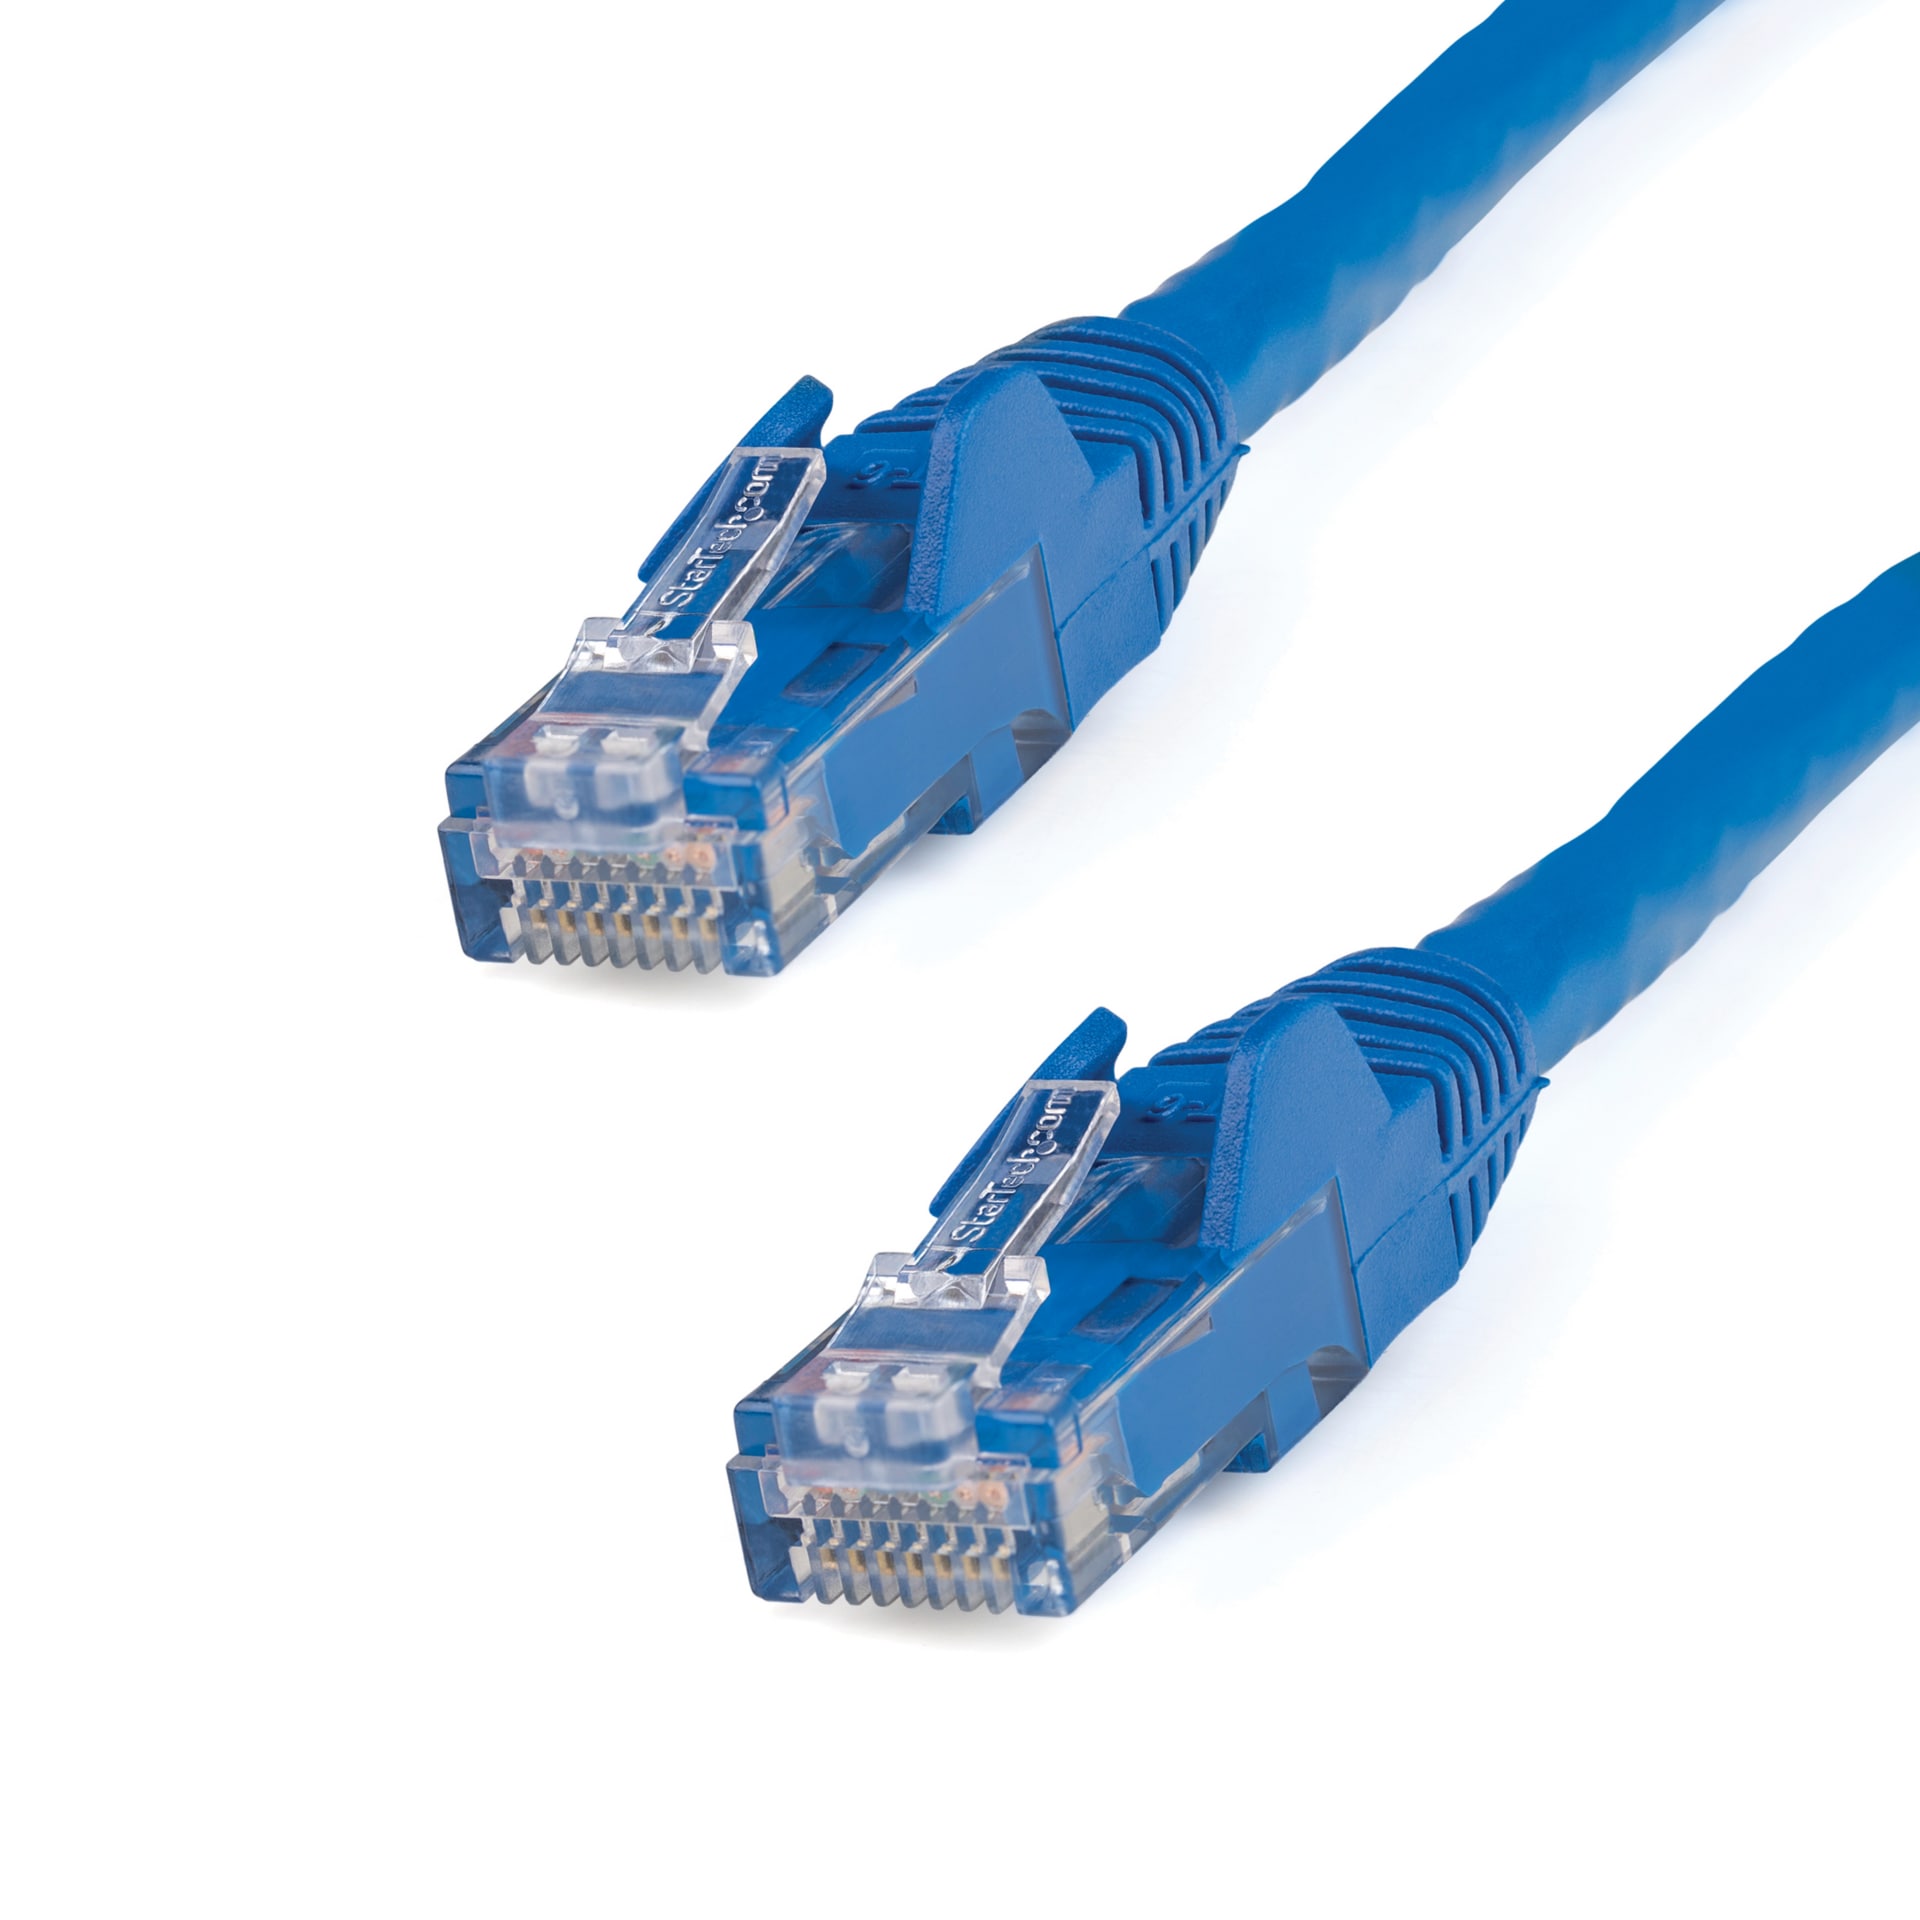 StarTech.com 1ft CAT6 Ethernet Cable Blue Snagless UTP CAT 6 Gigabit Cord/Wire 100W PoE 650MHz